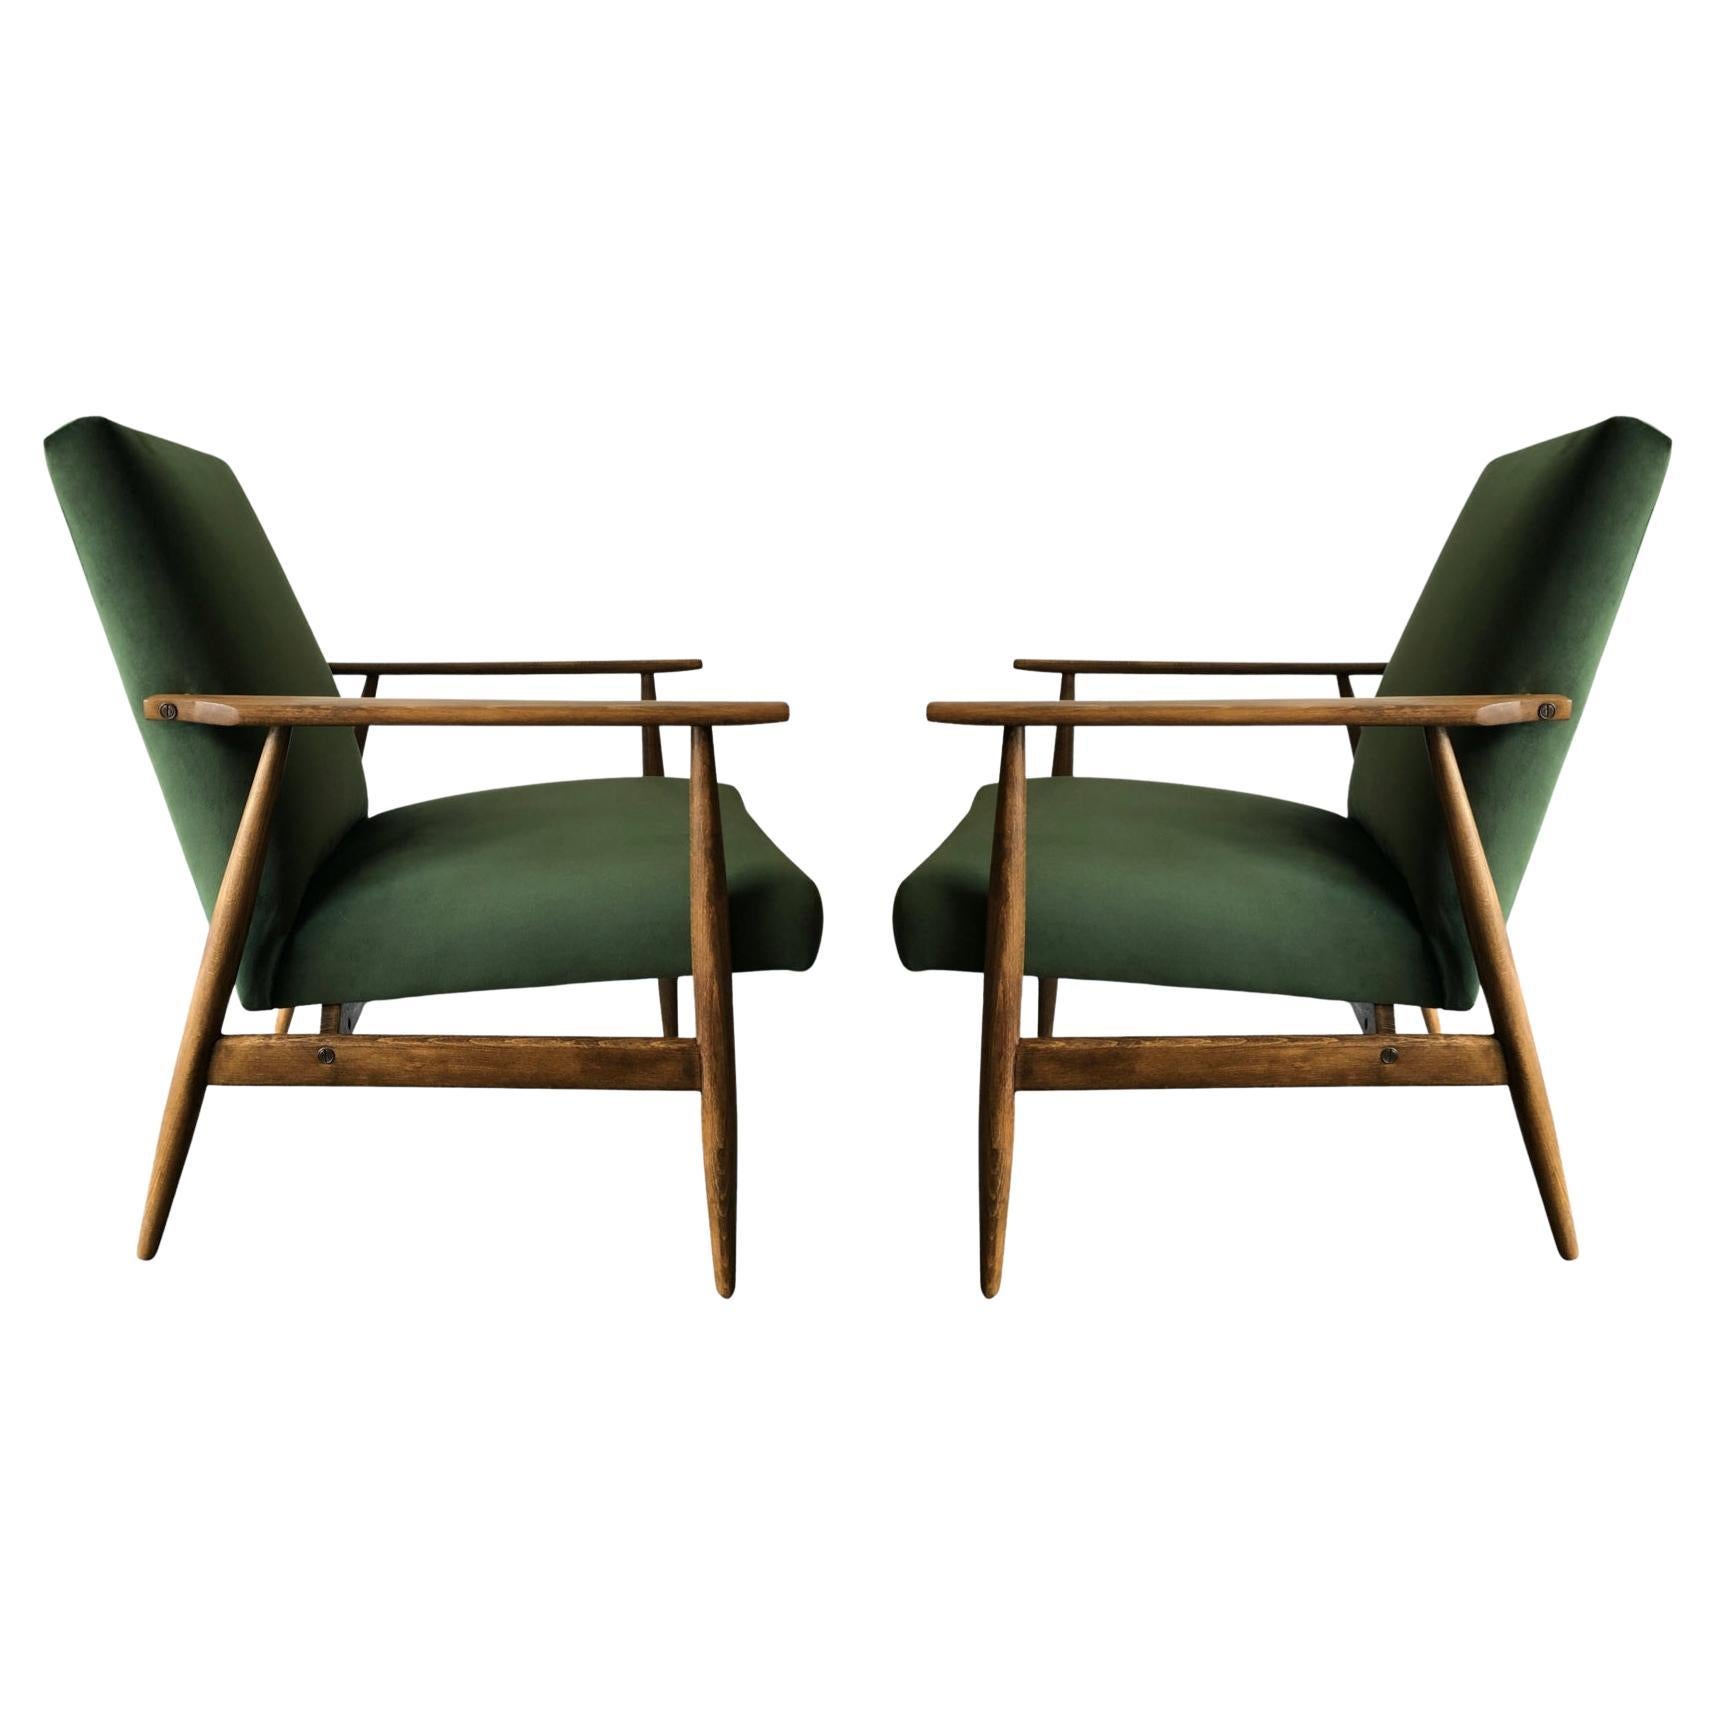 Grüne Mid-Century-Sessel aus Samt von Henryk Lis, 1960er Jahre, 2er-Set, Set